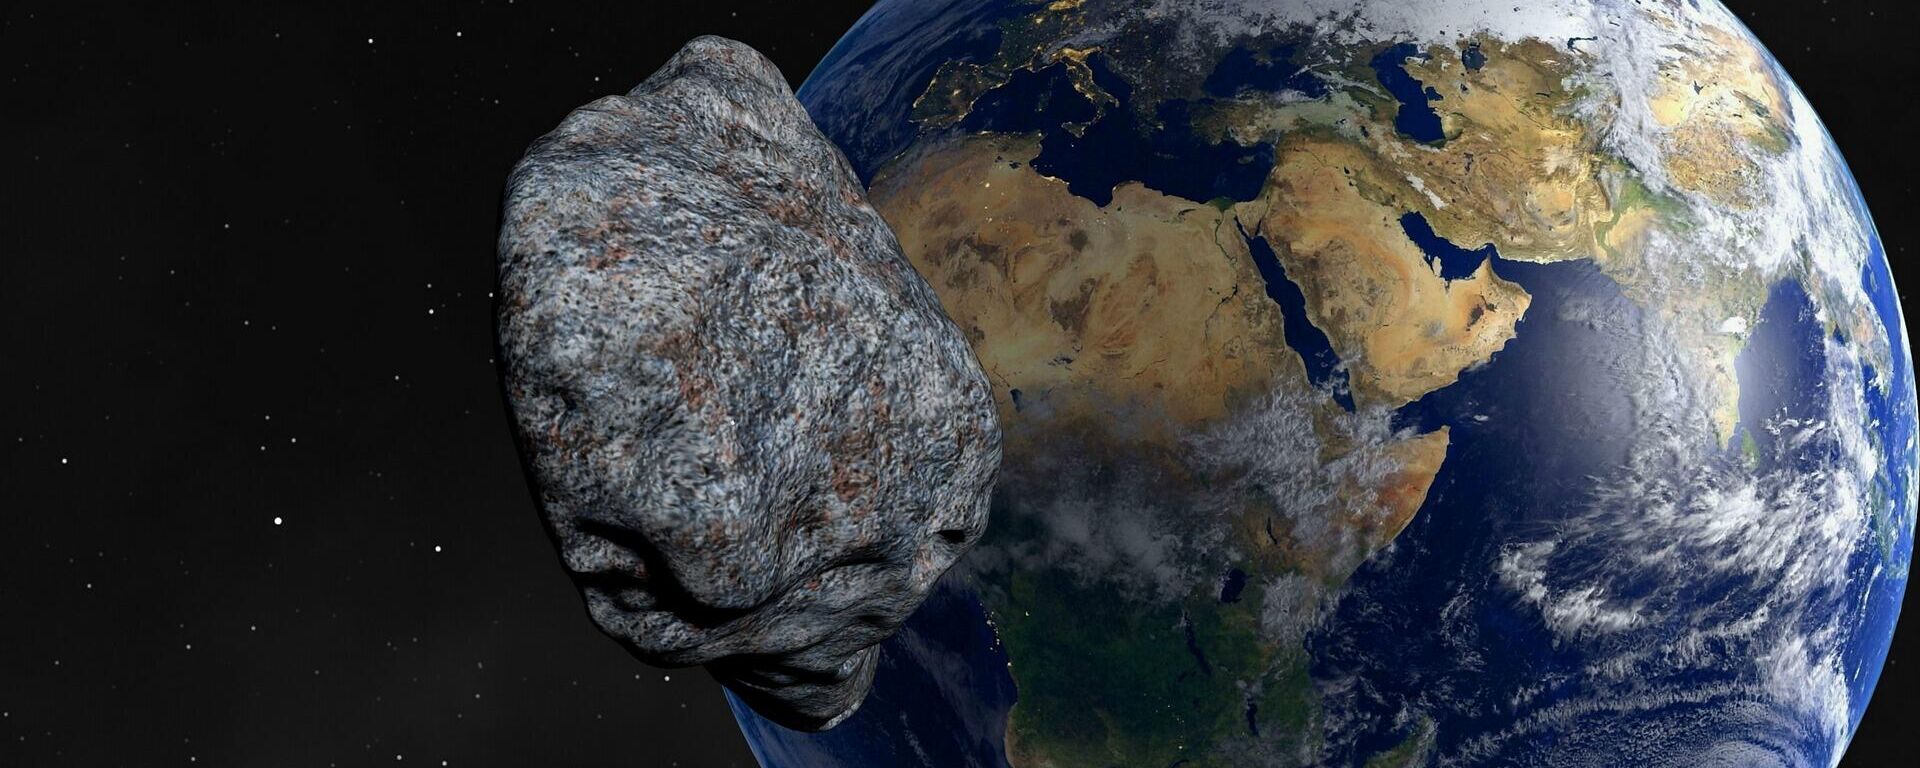 Asteroide (imagem de referência) - Sputnik Brasil, 1920, 02.12.2021